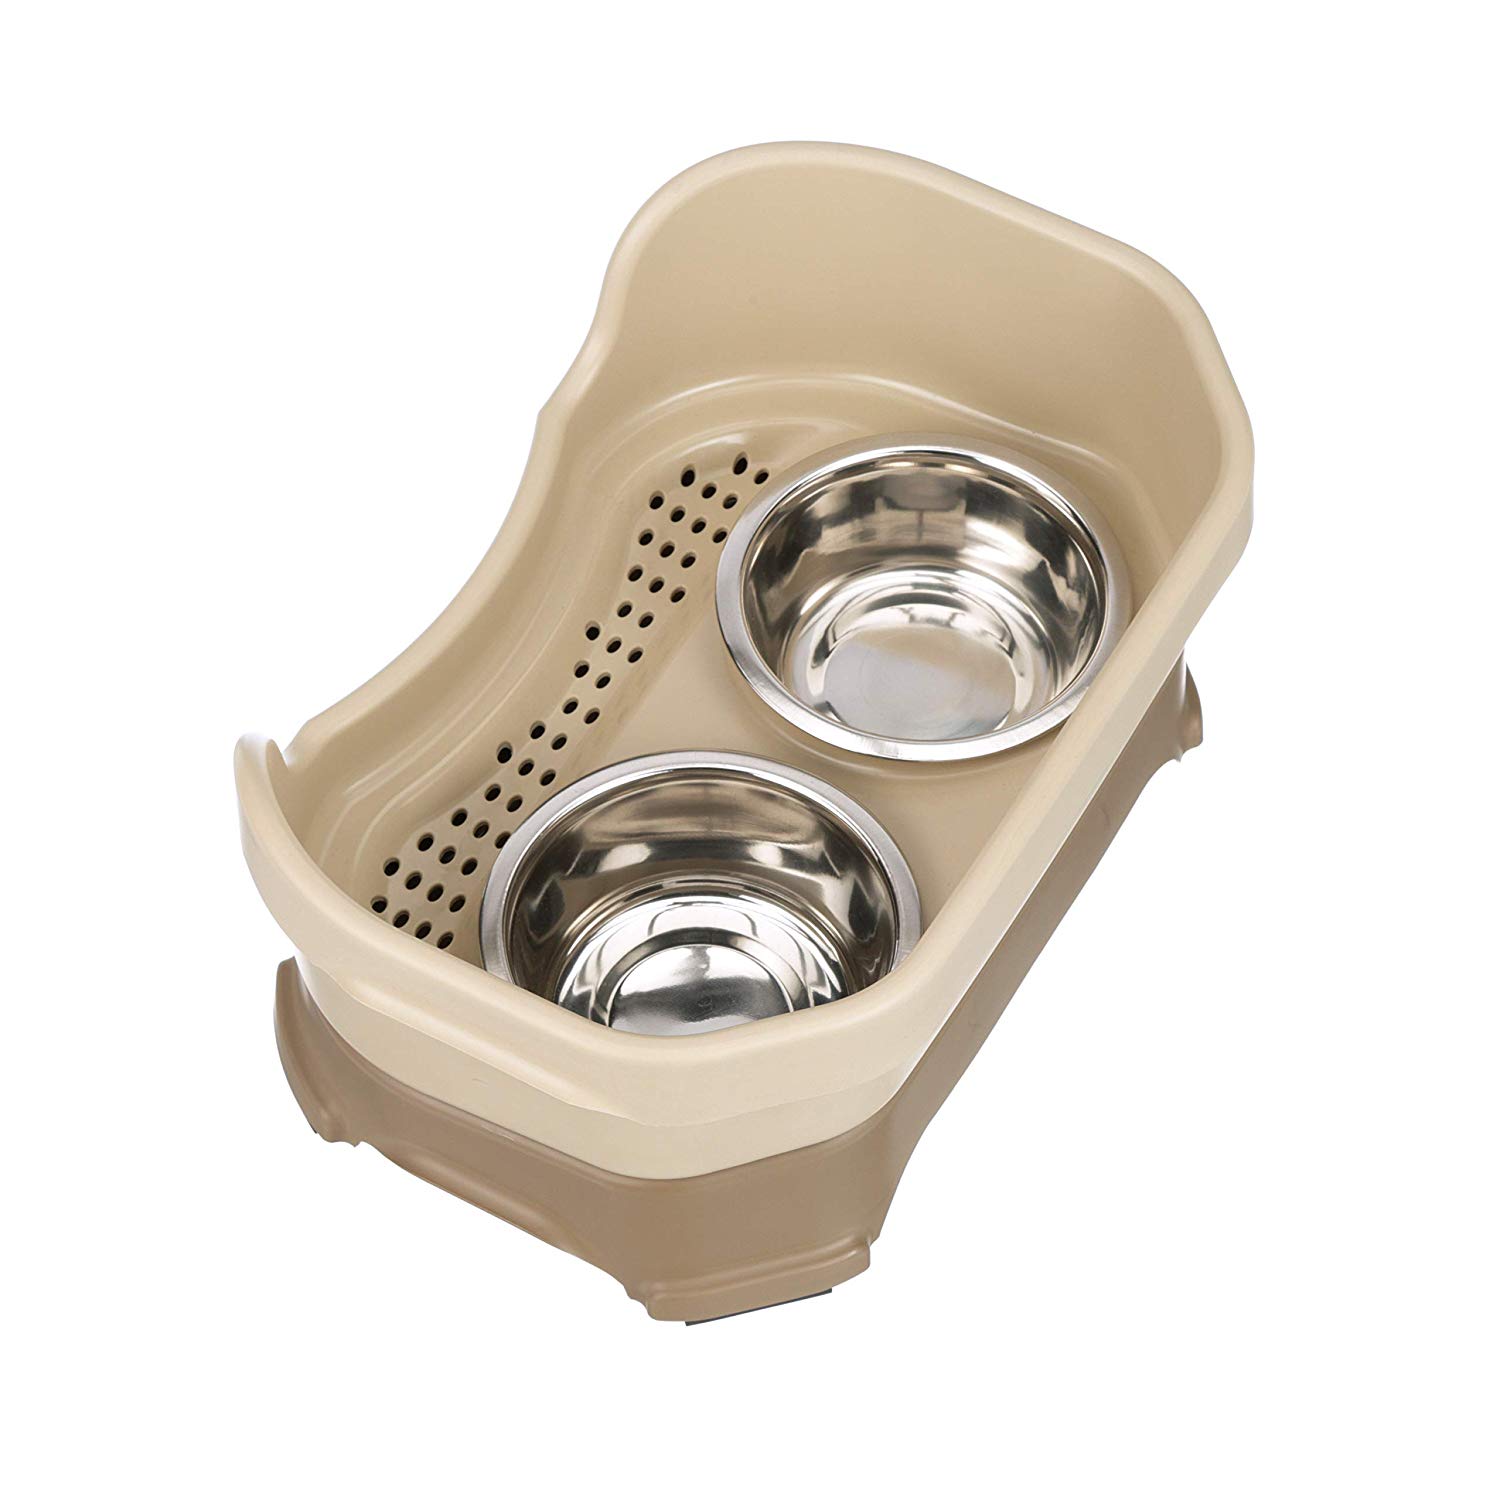 small slow feeder dog bowl